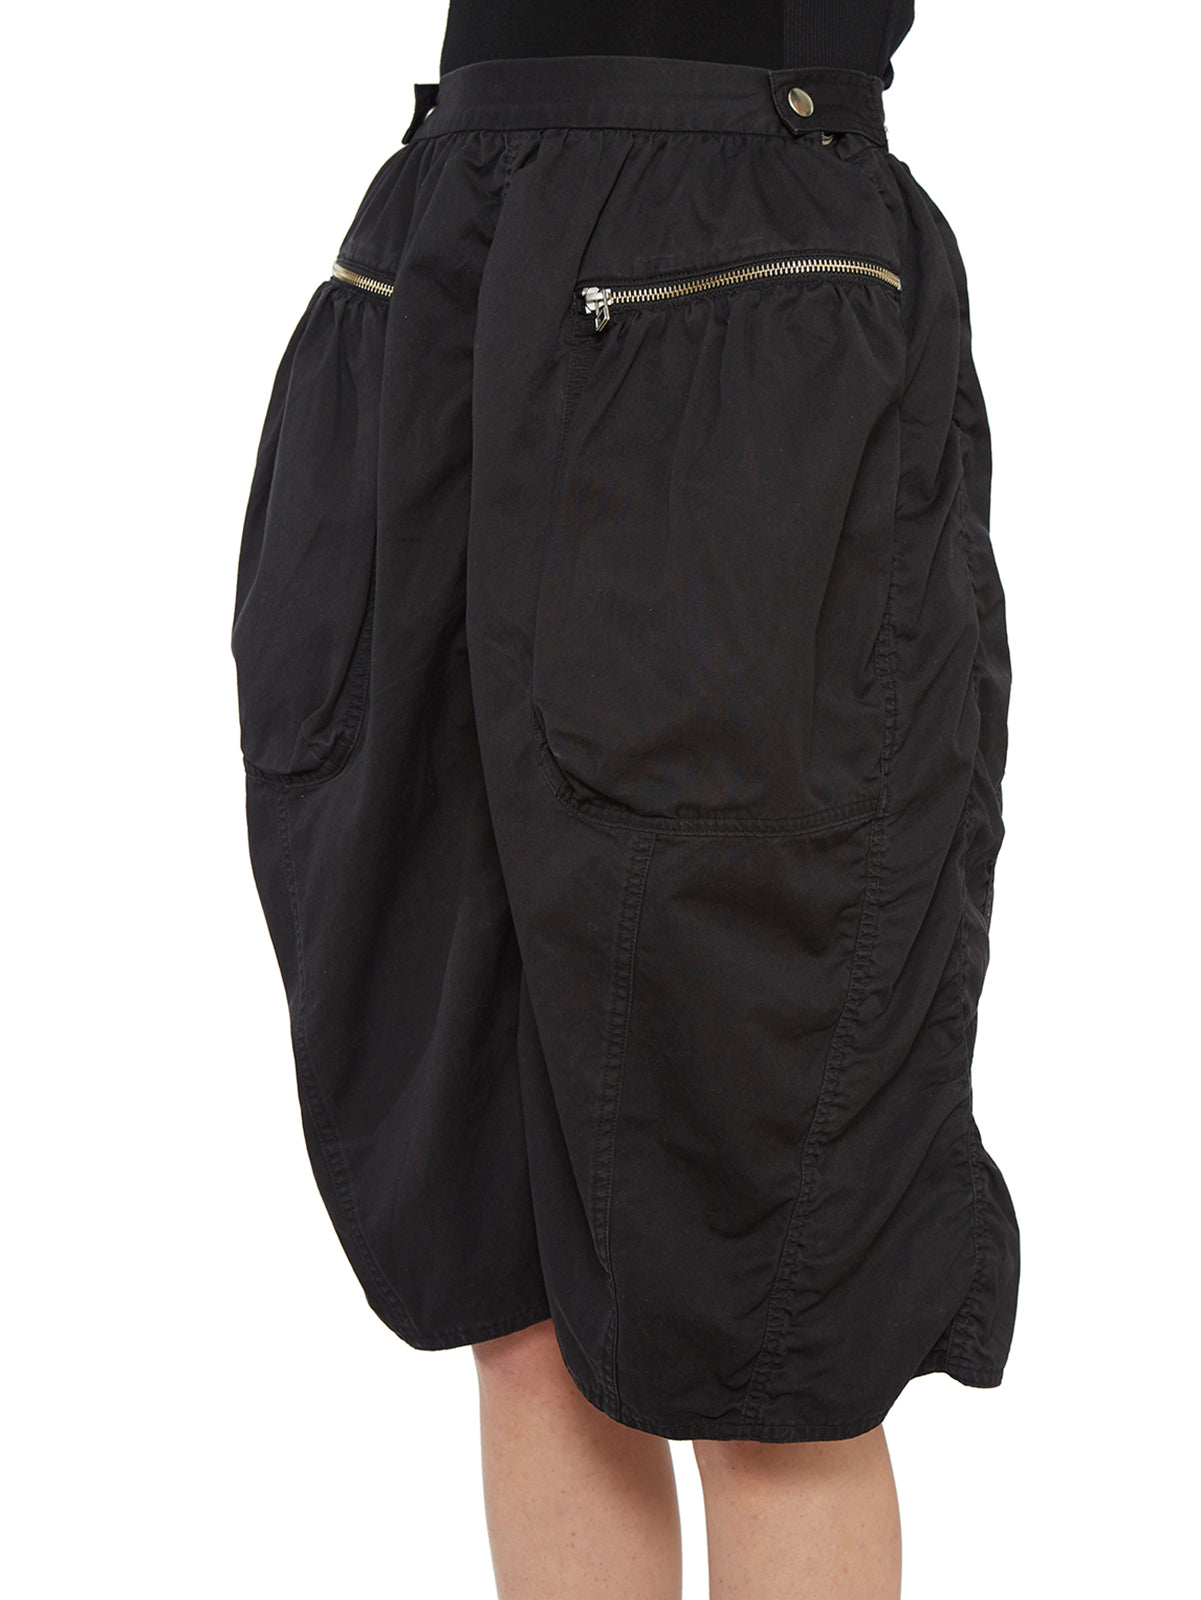 AMBUSH Modern Parachute Cotton Skirt for Women - FW19 Collection